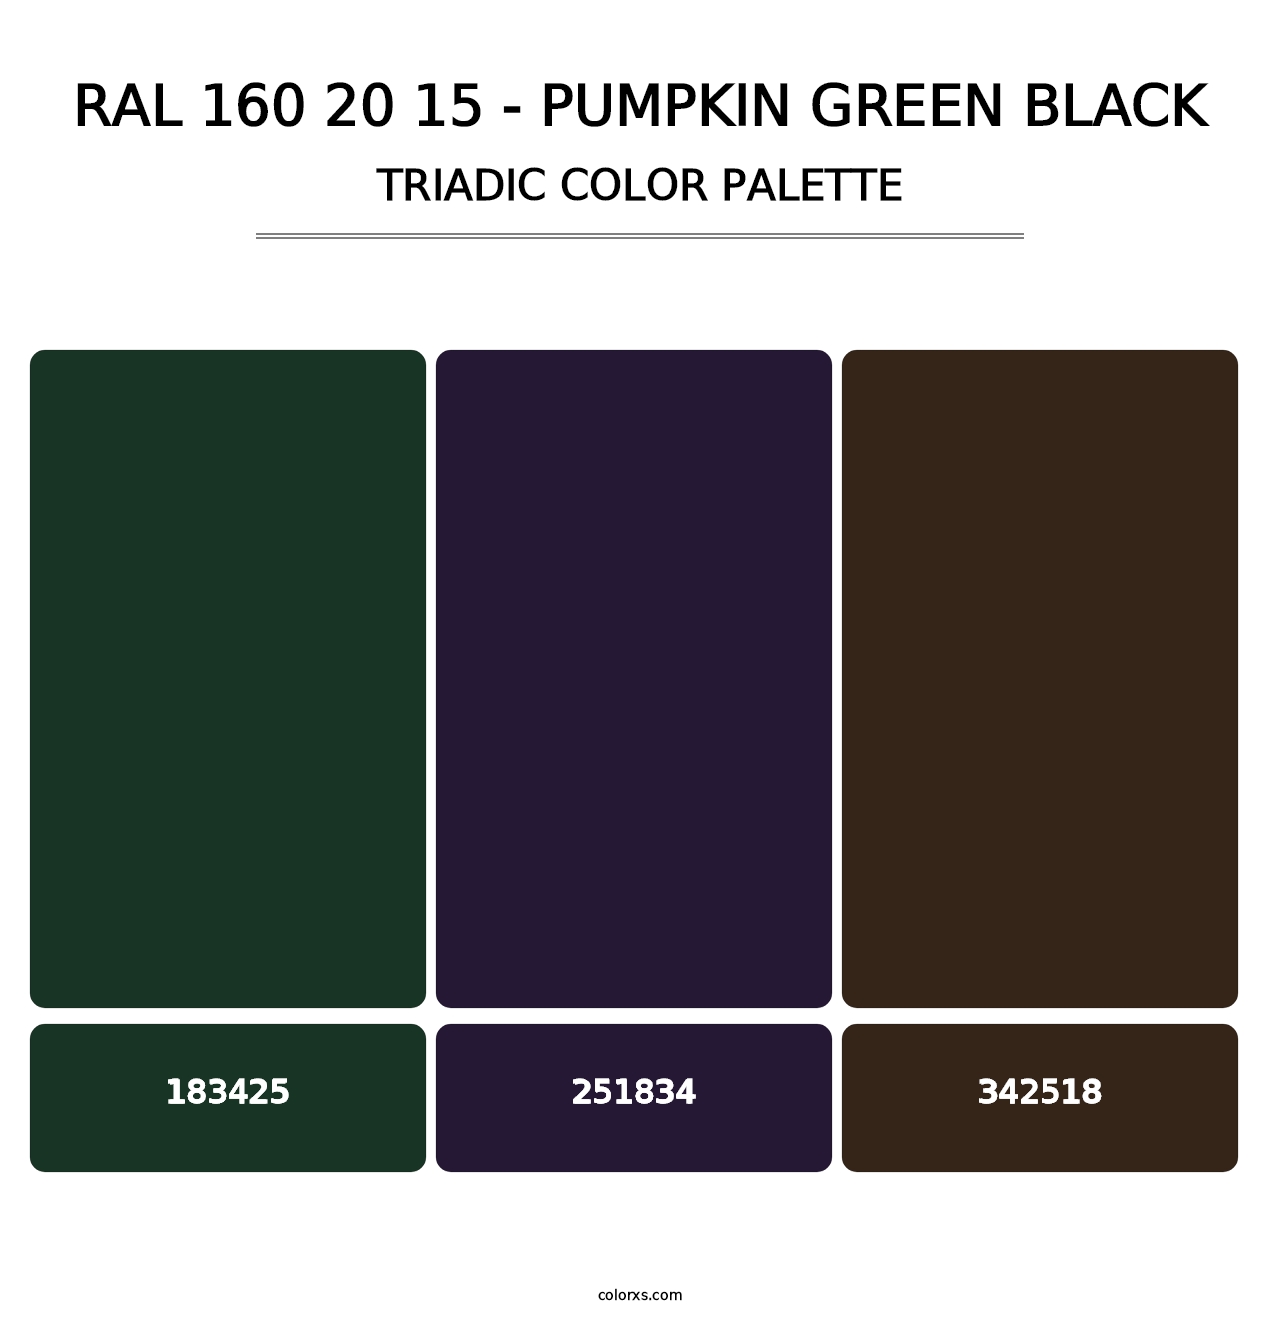 RAL 160 20 15 - Pumpkin Green Black - Triadic Color Palette